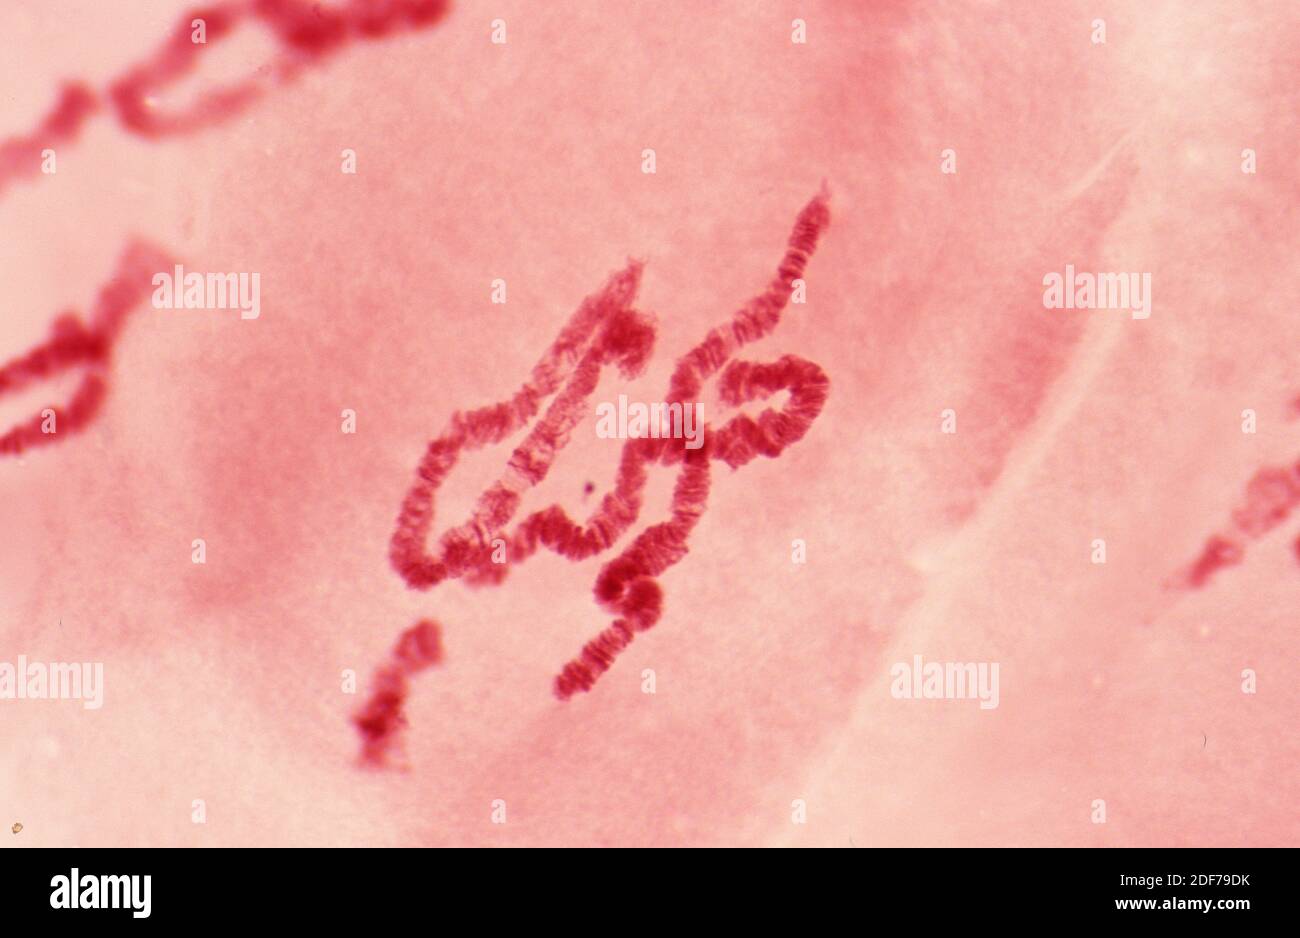 Cromosomas politeno de las células de la glándula salival de Chironomus. Fotomicrografía. Foto de stock